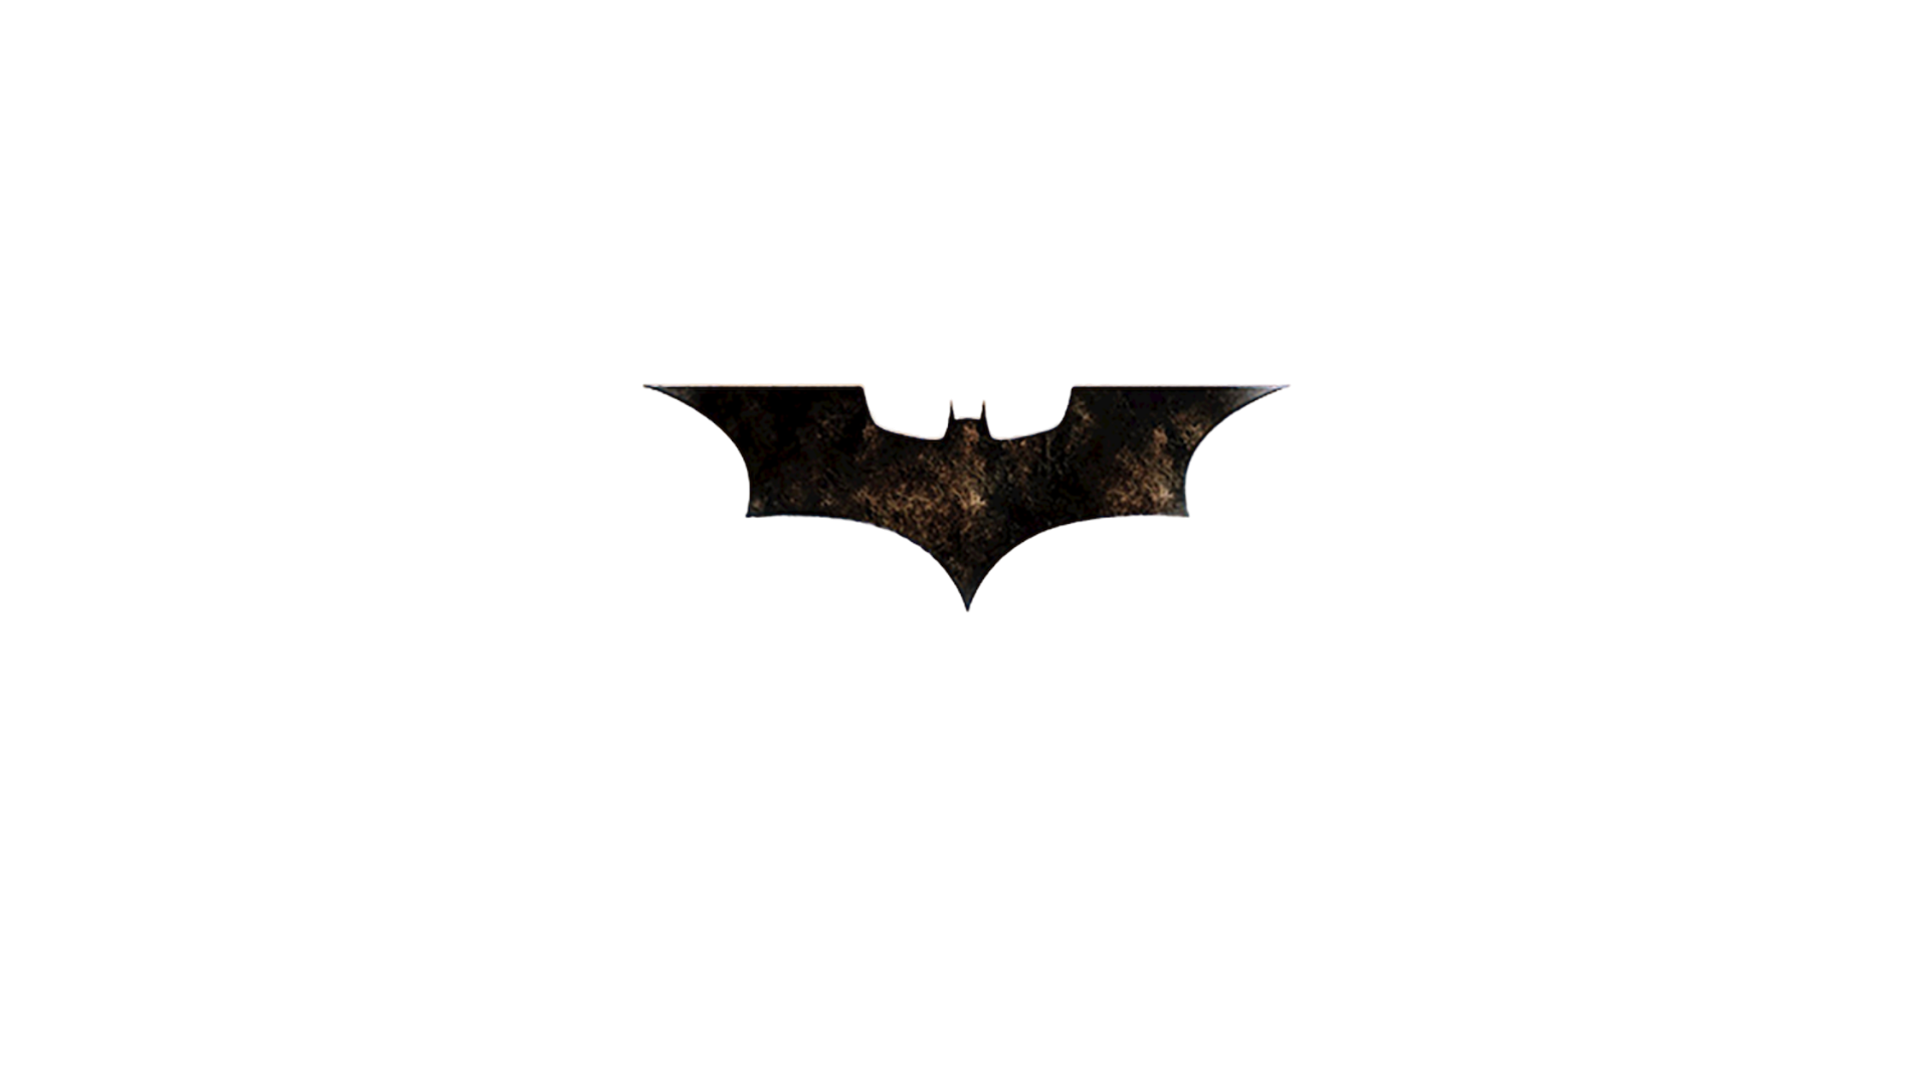 Batman Begins (2005) Logo by J0J0999Ozman on DeviantArt